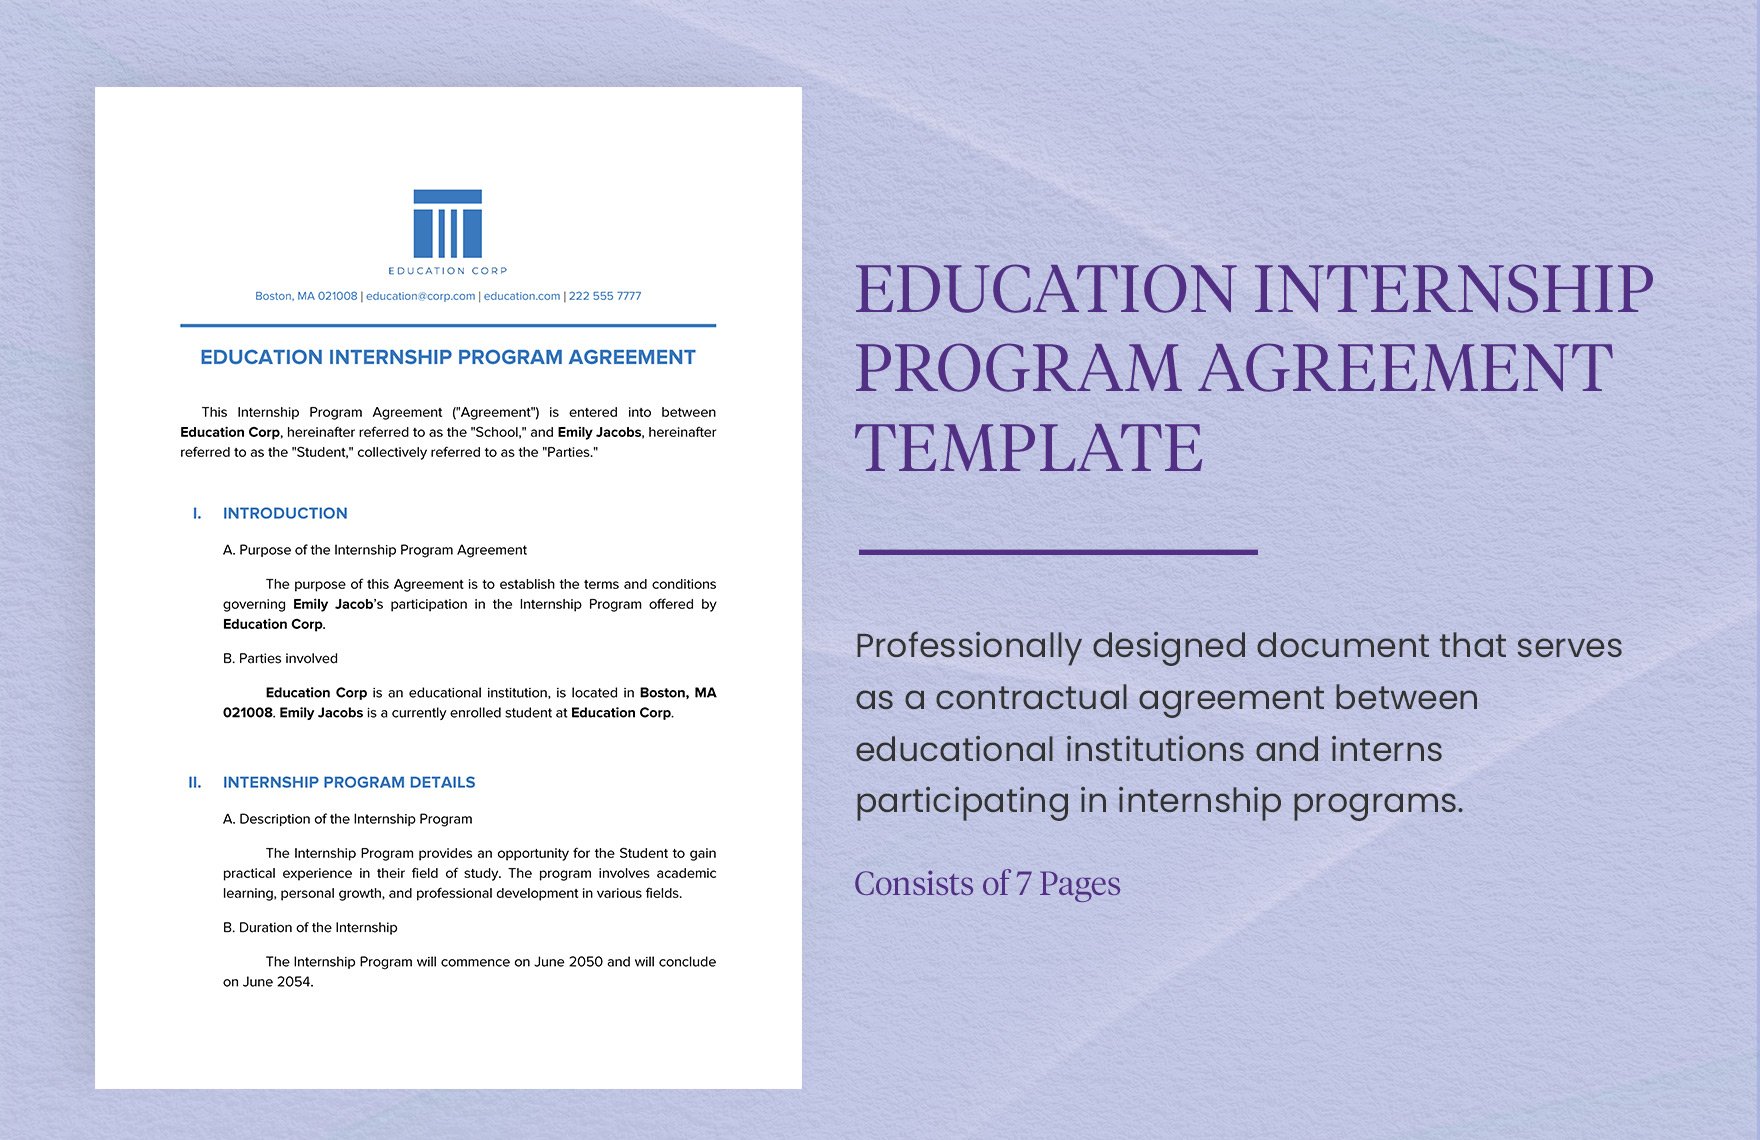 Education Internship Program Agreement Template